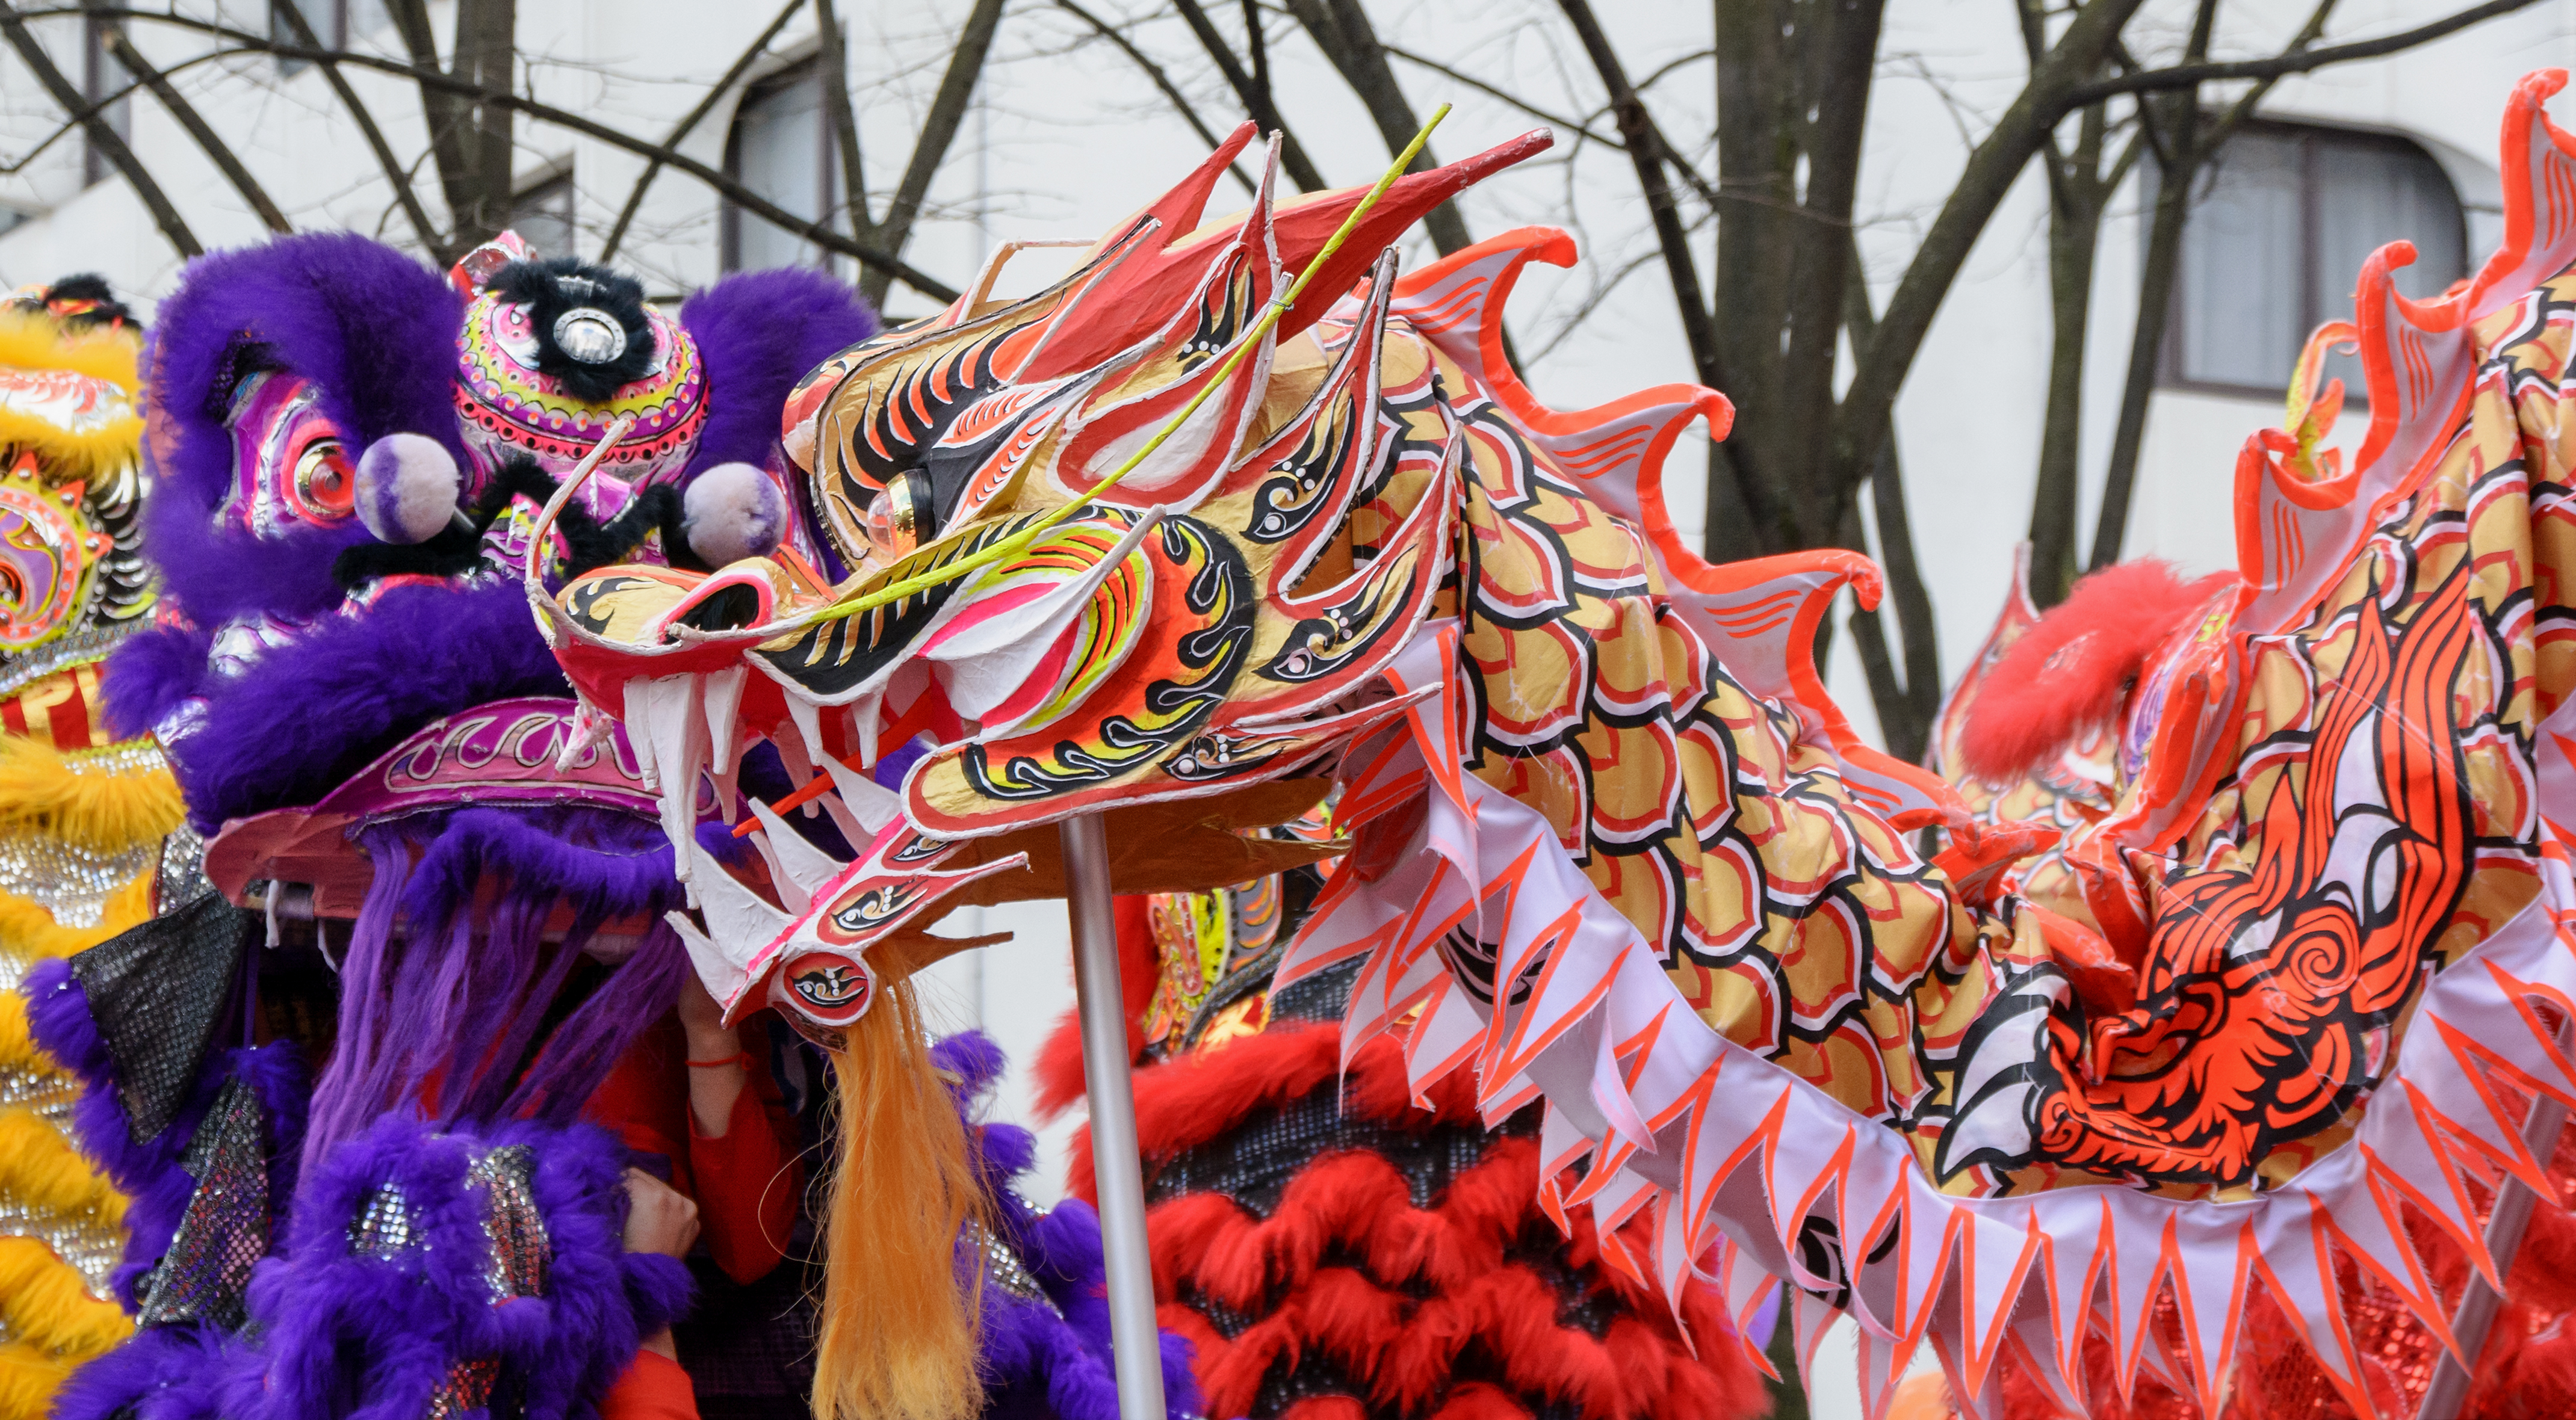 File:Nouvel an chinois 2015 Paris 13 danses lion dragon.jpg - Wikimedia Commons